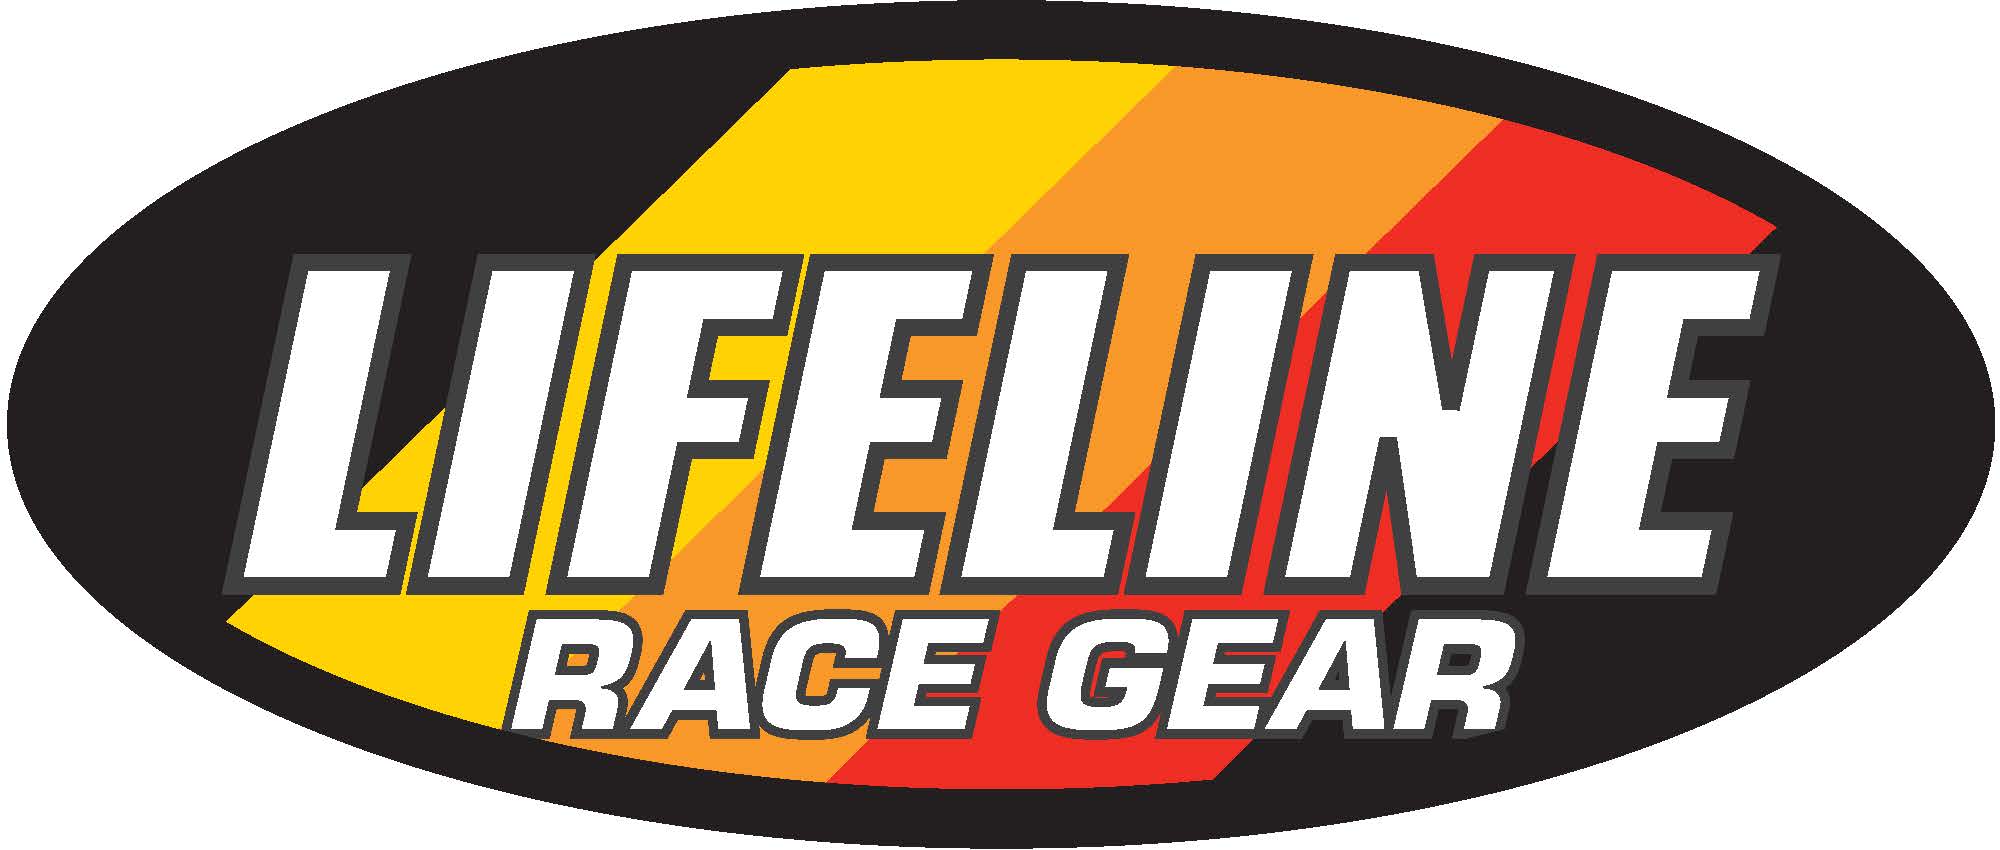 Lifeline Race Gear